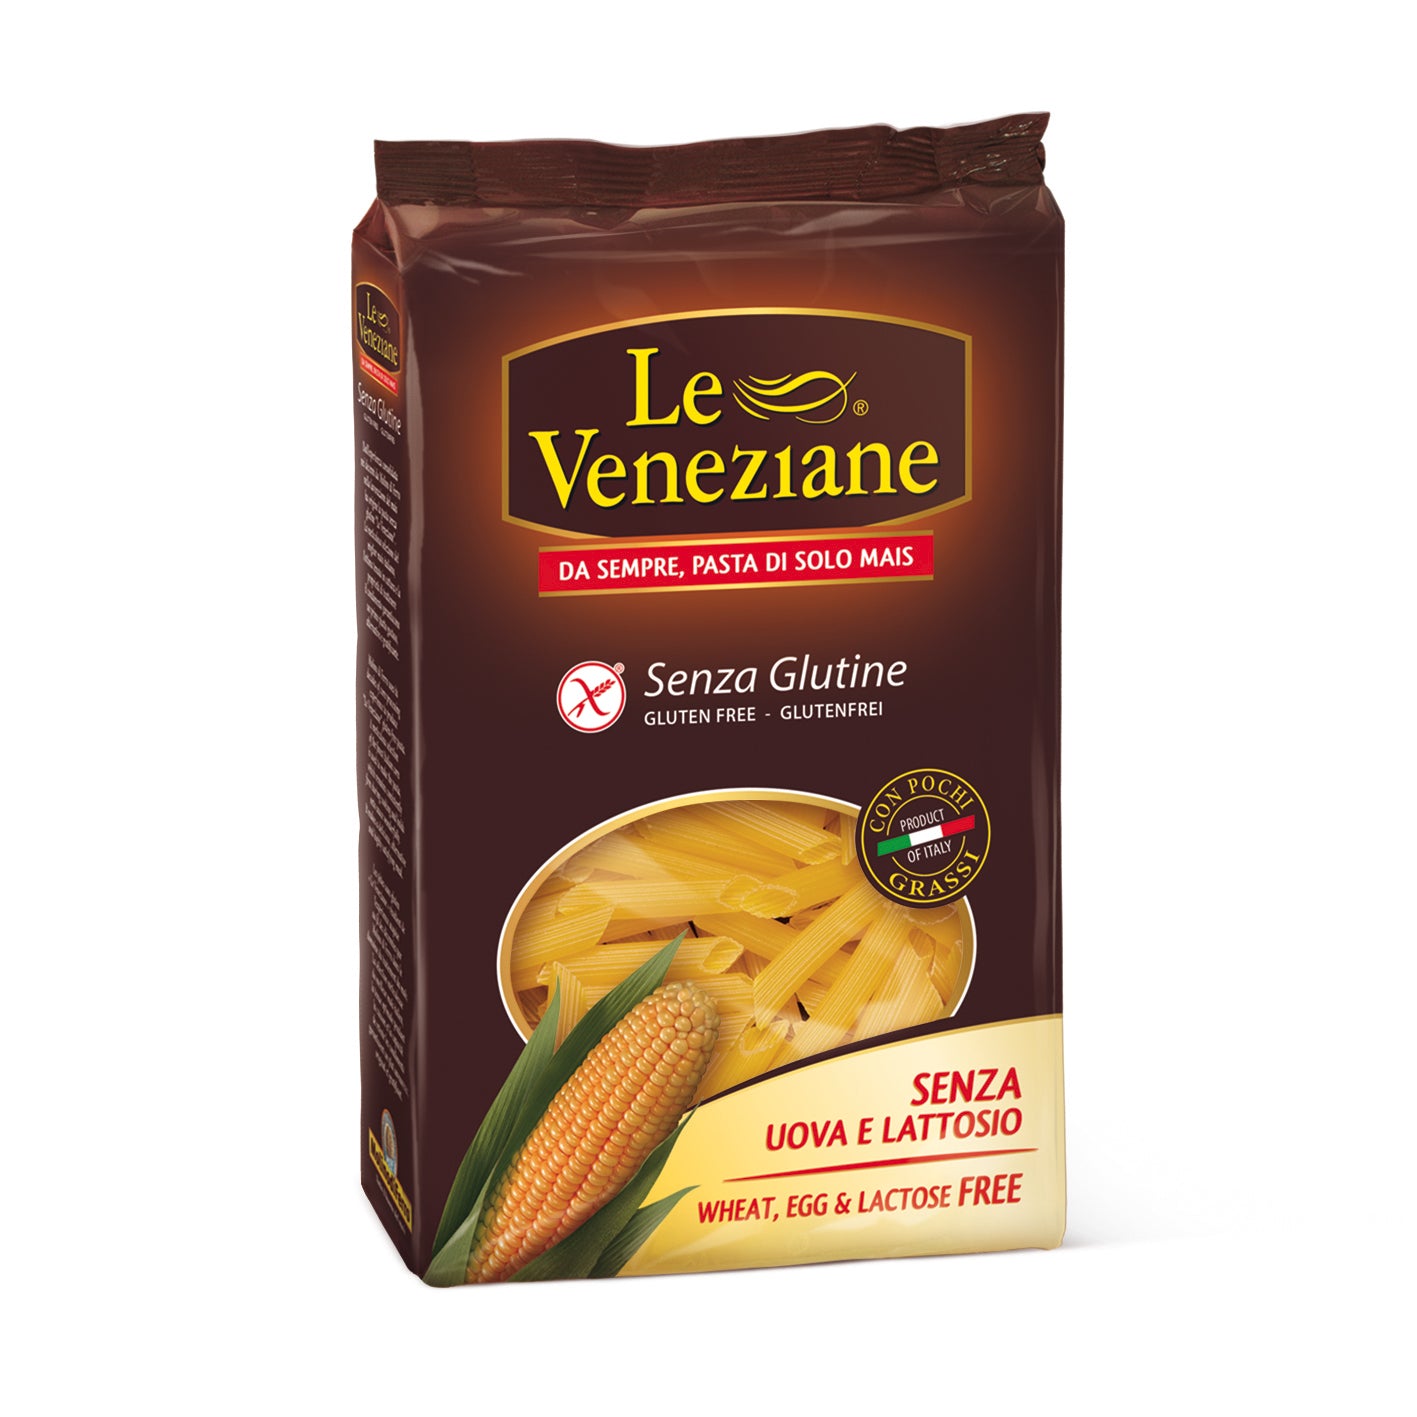 Le Veneziane Penne Rigate Gluten Free Pasta Box